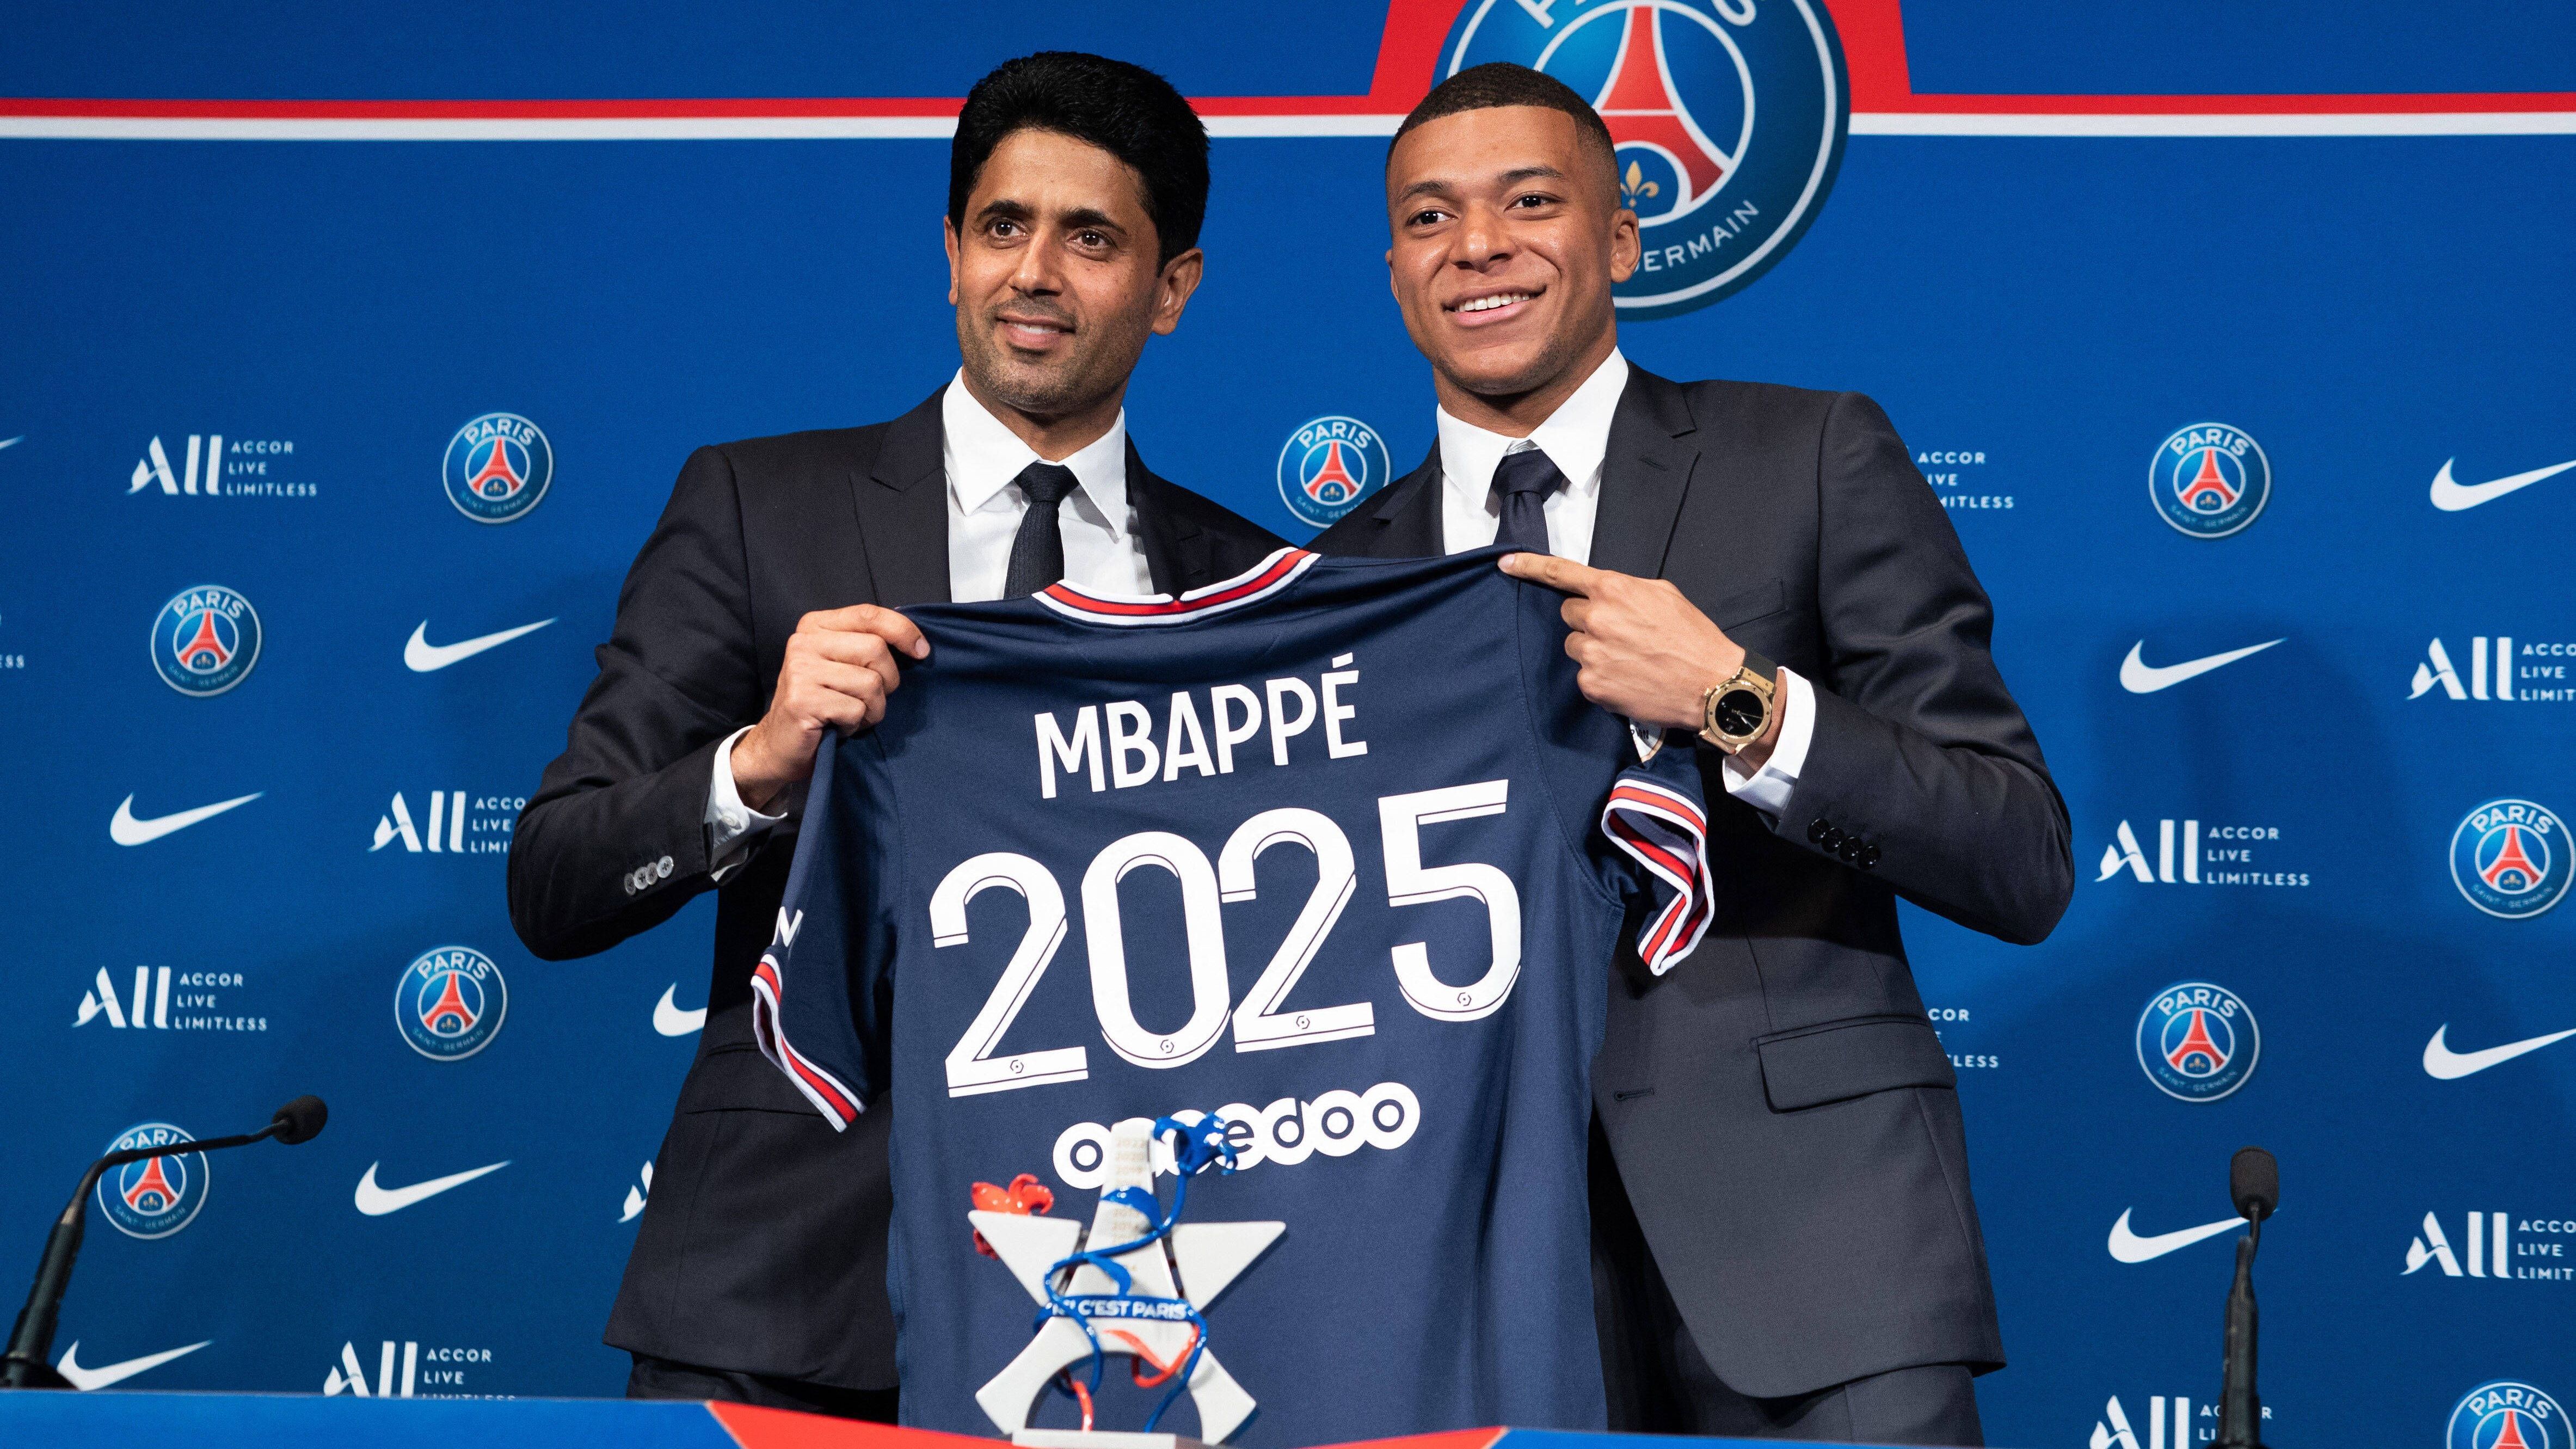 <strong>Paris Saint-Germain</strong><br>Oder grüßt am Ende doch das tägliche Murmeltier und Mbappe verlängert erneut seinen Vertrag bei PSG? Ausschließen kann man im Fußball nie etwas.